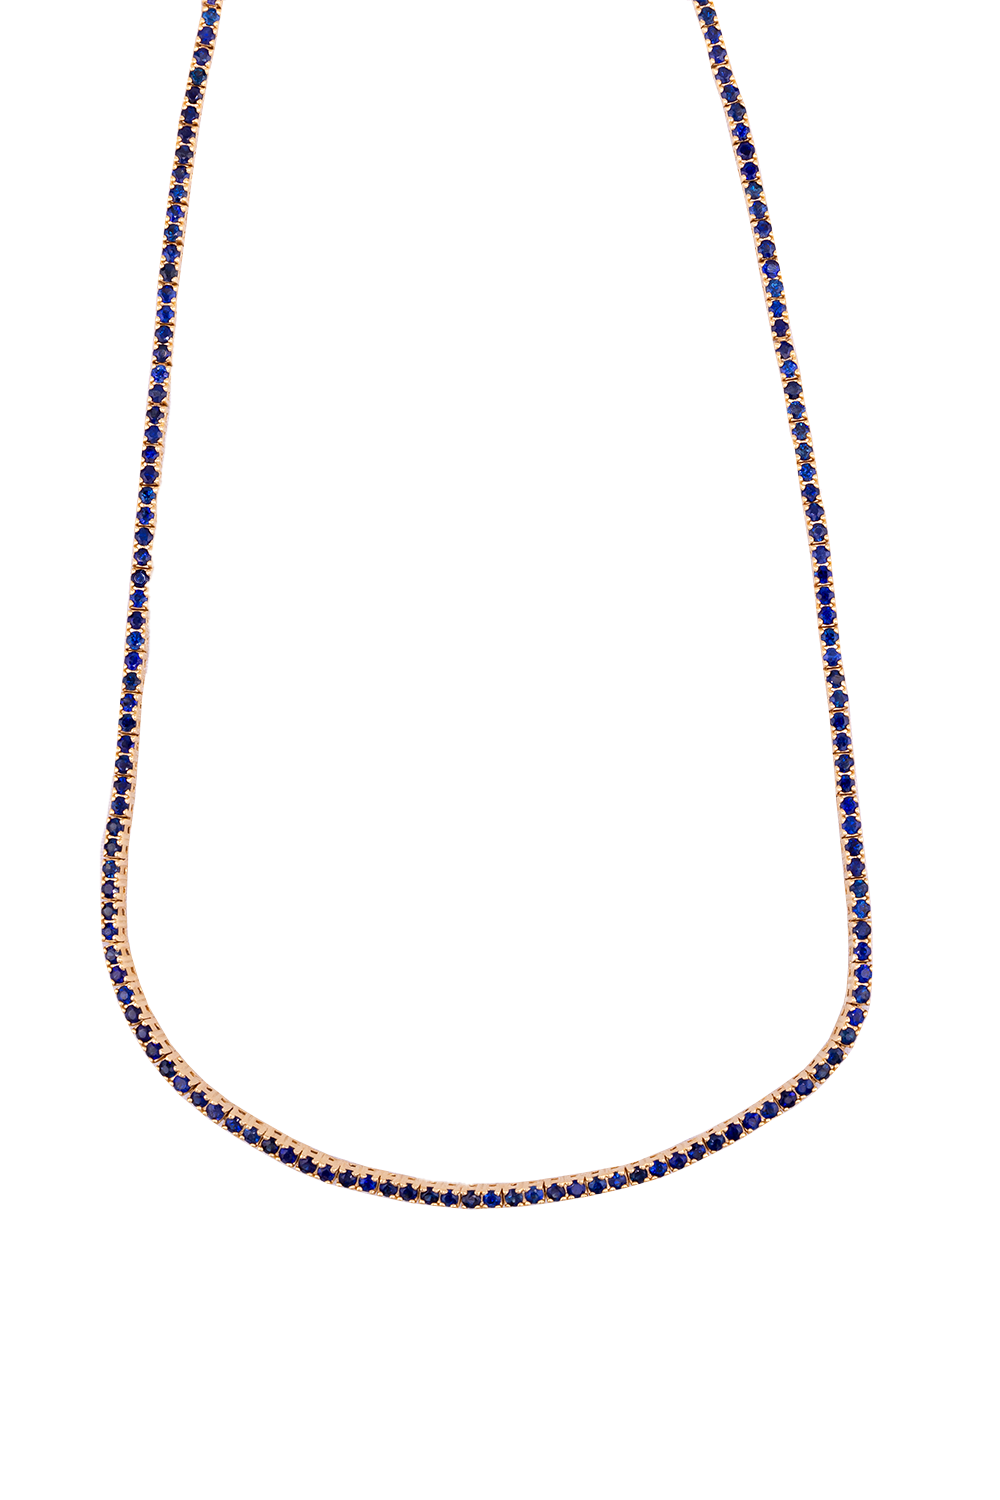 Blue Sapphire Tennis Necklace - PFF